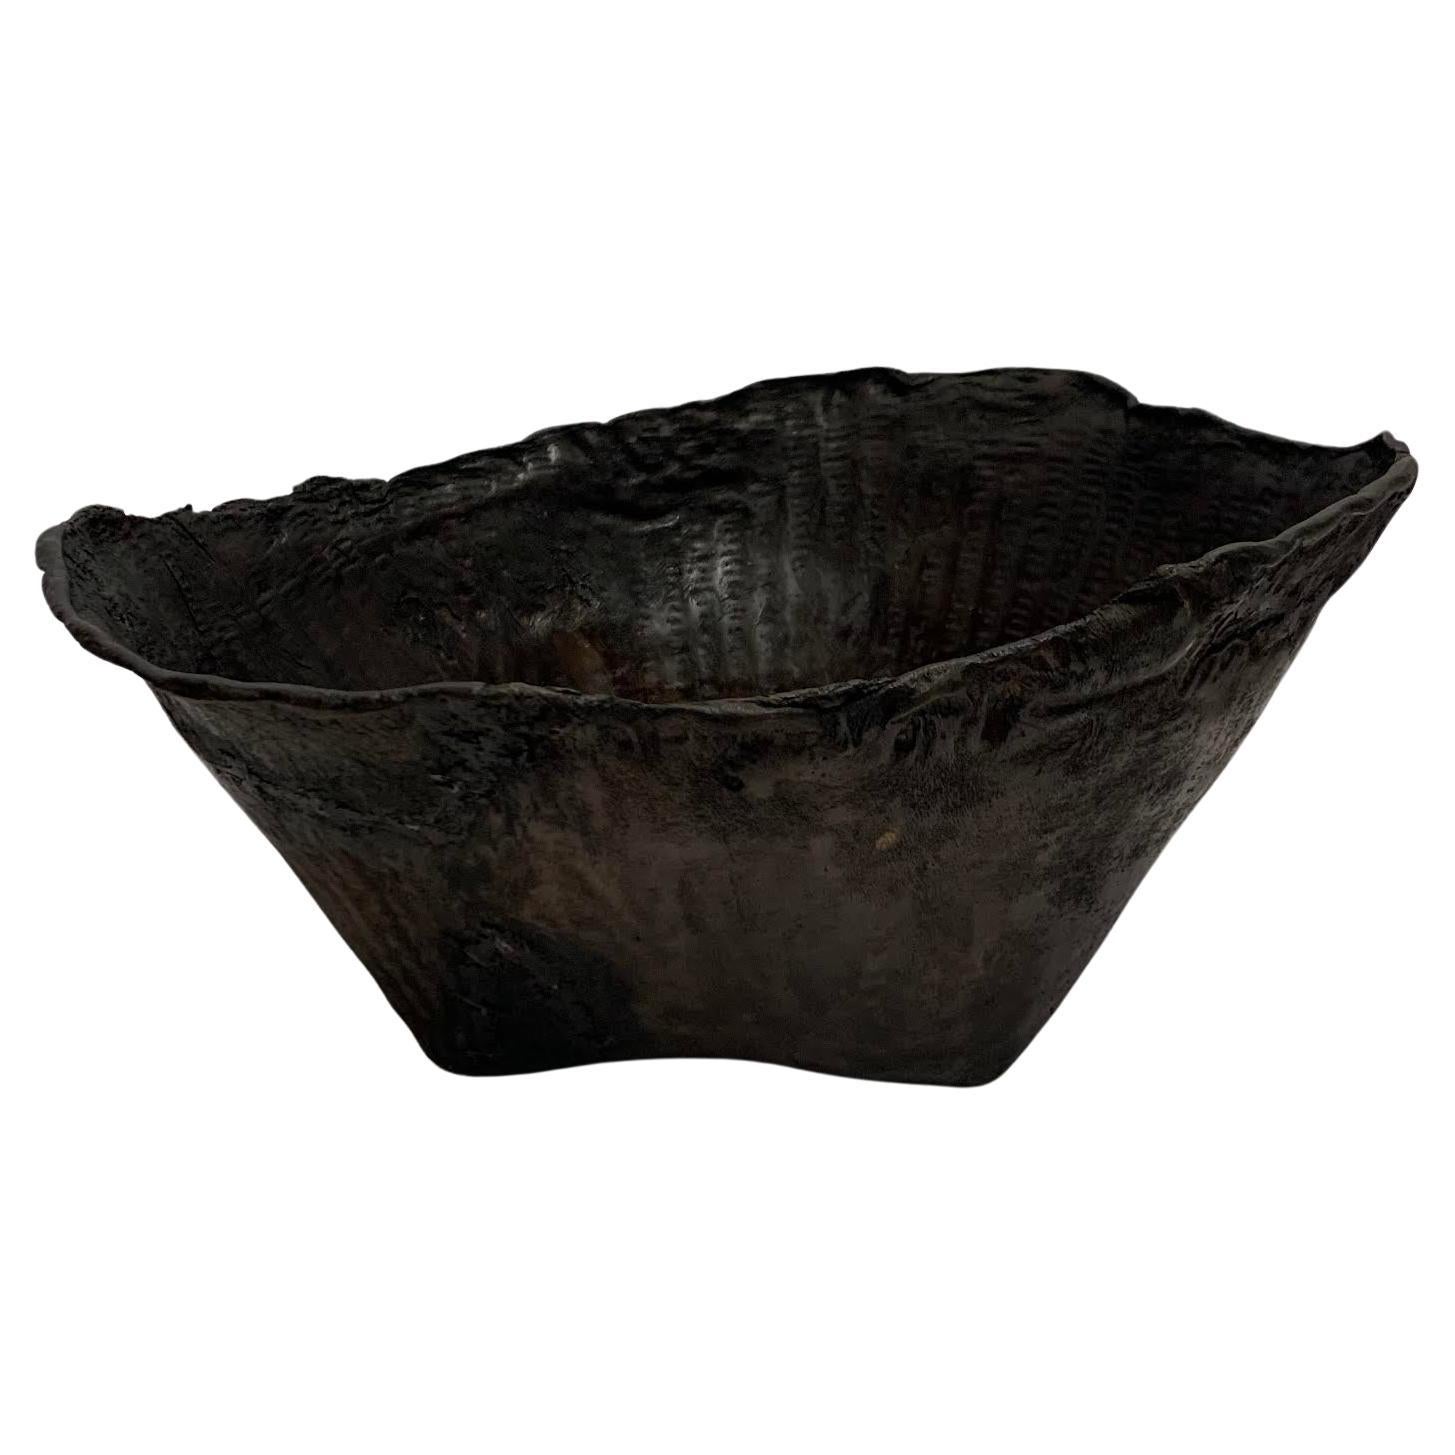 Dried Buffalo Skin Bowl, Borneo, 1940s